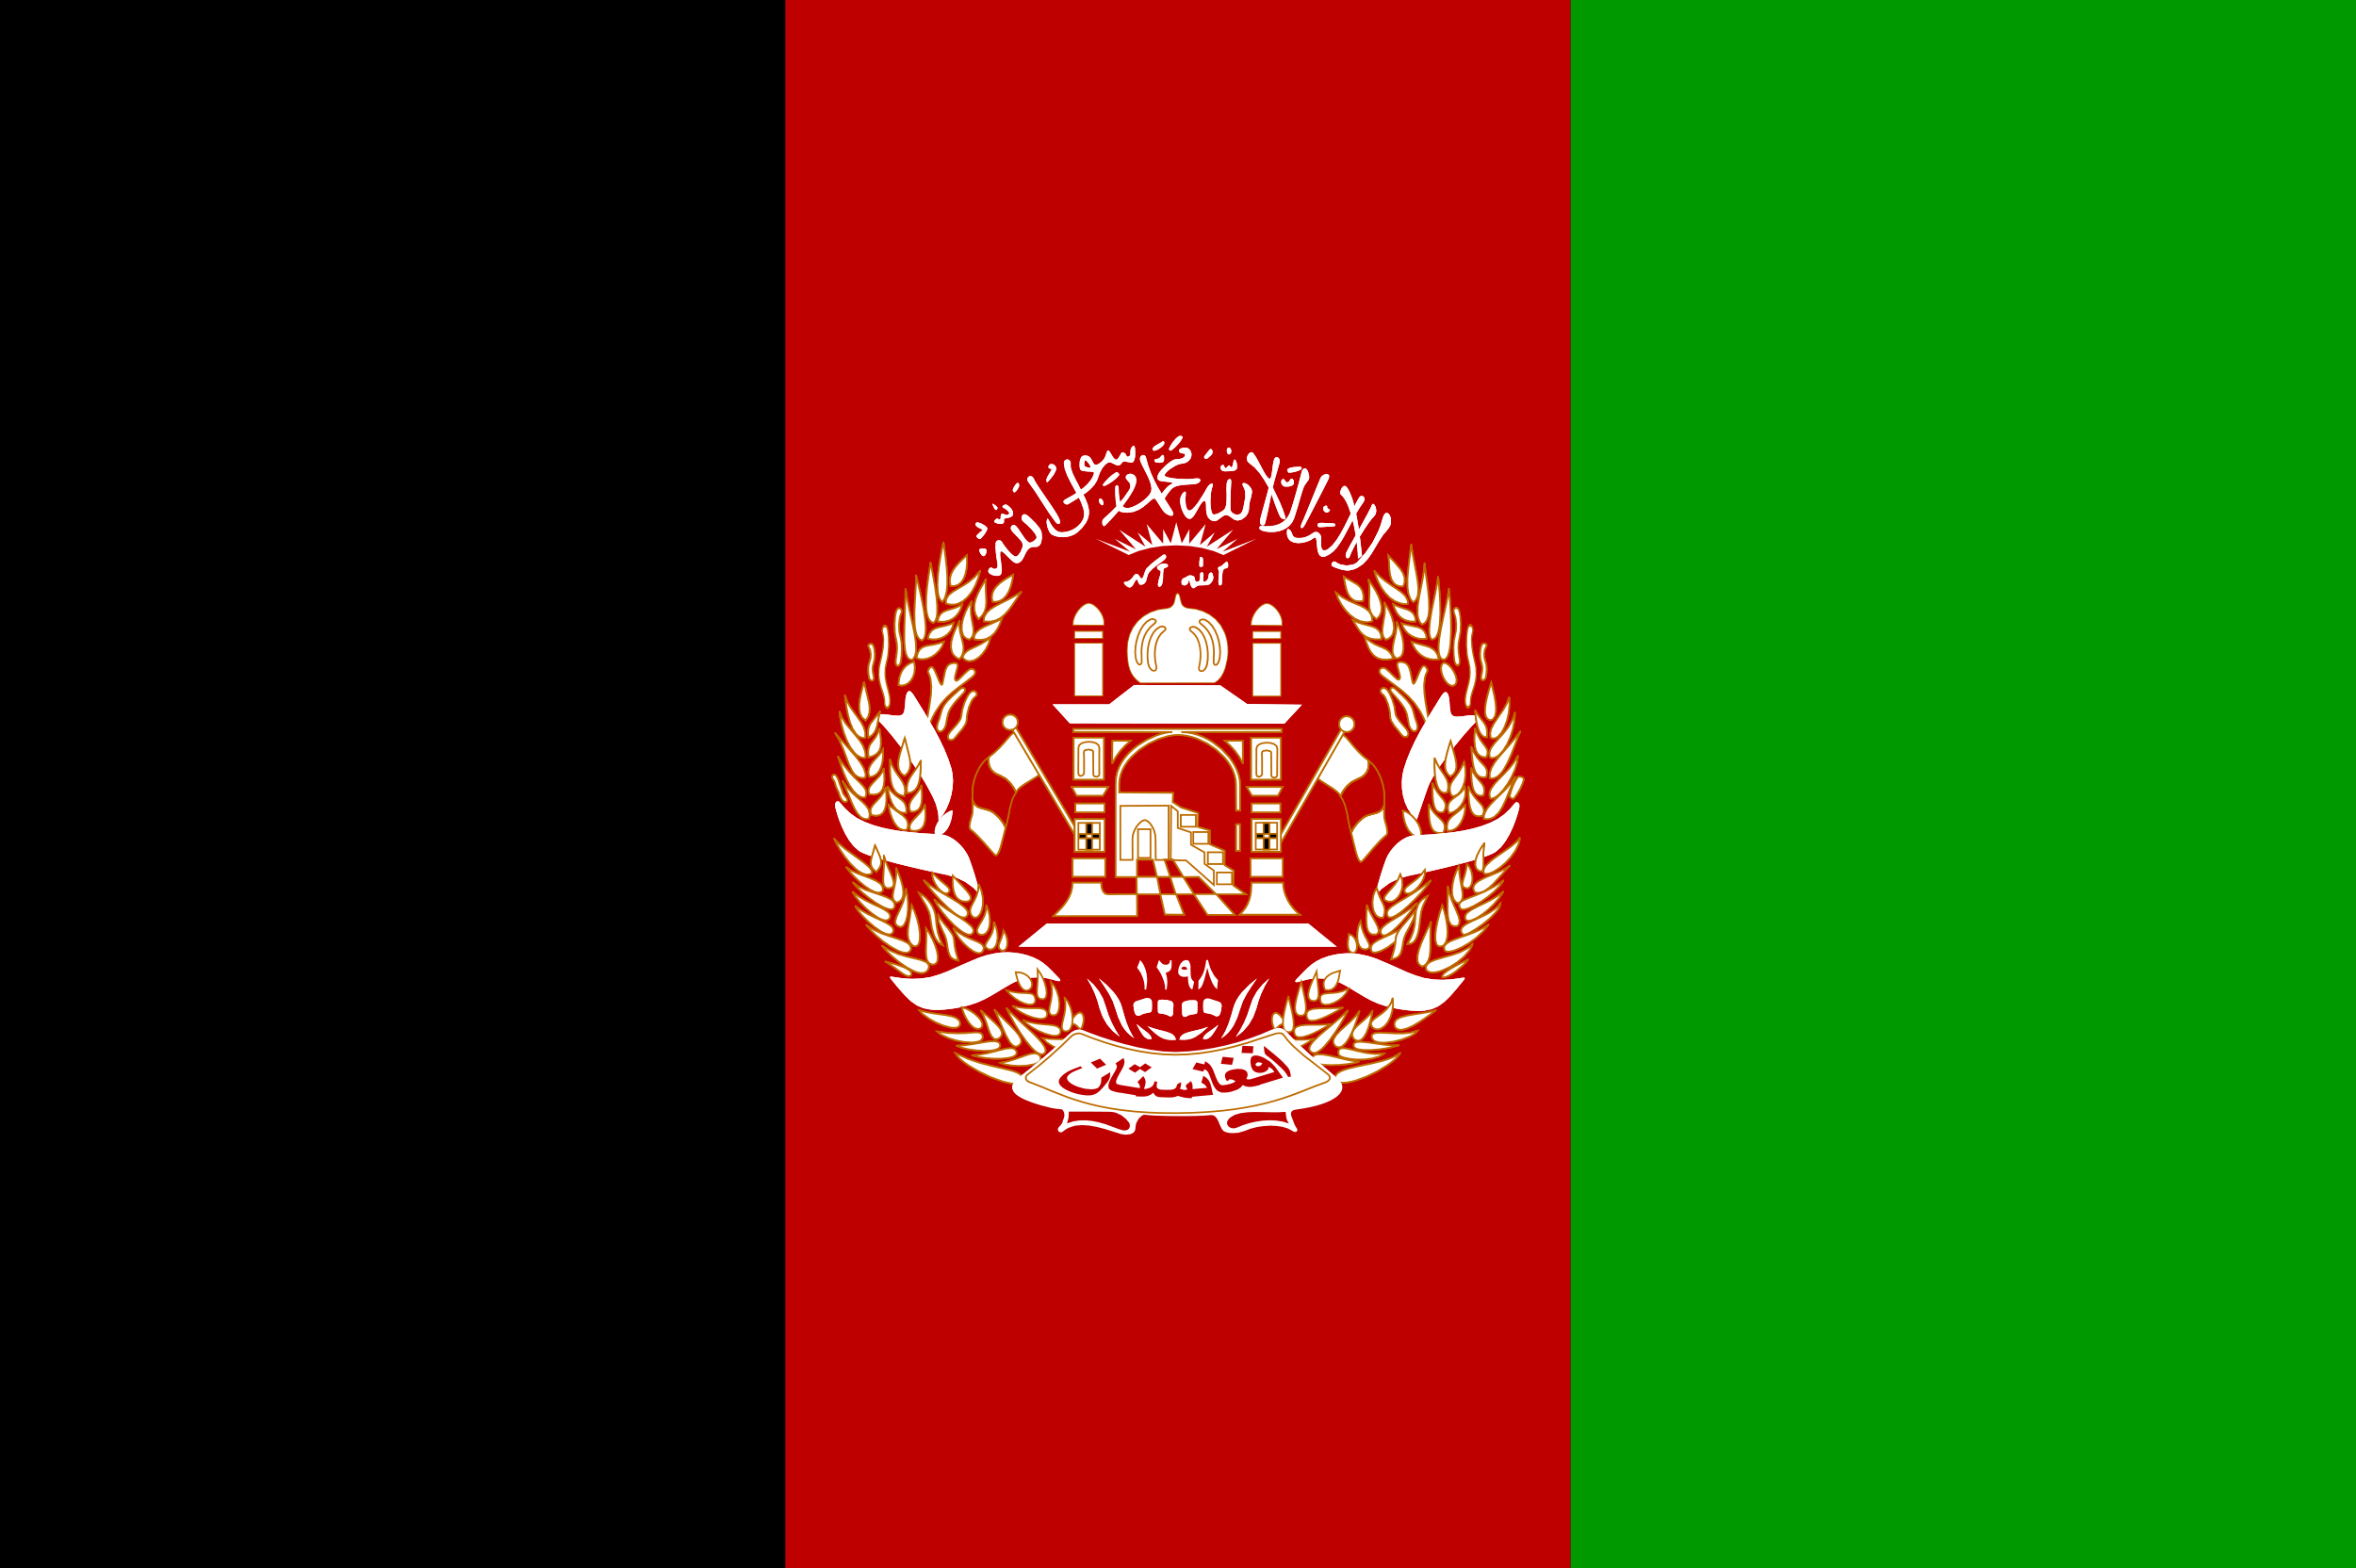 Styles Pk On Flags In Afghanistan Flag